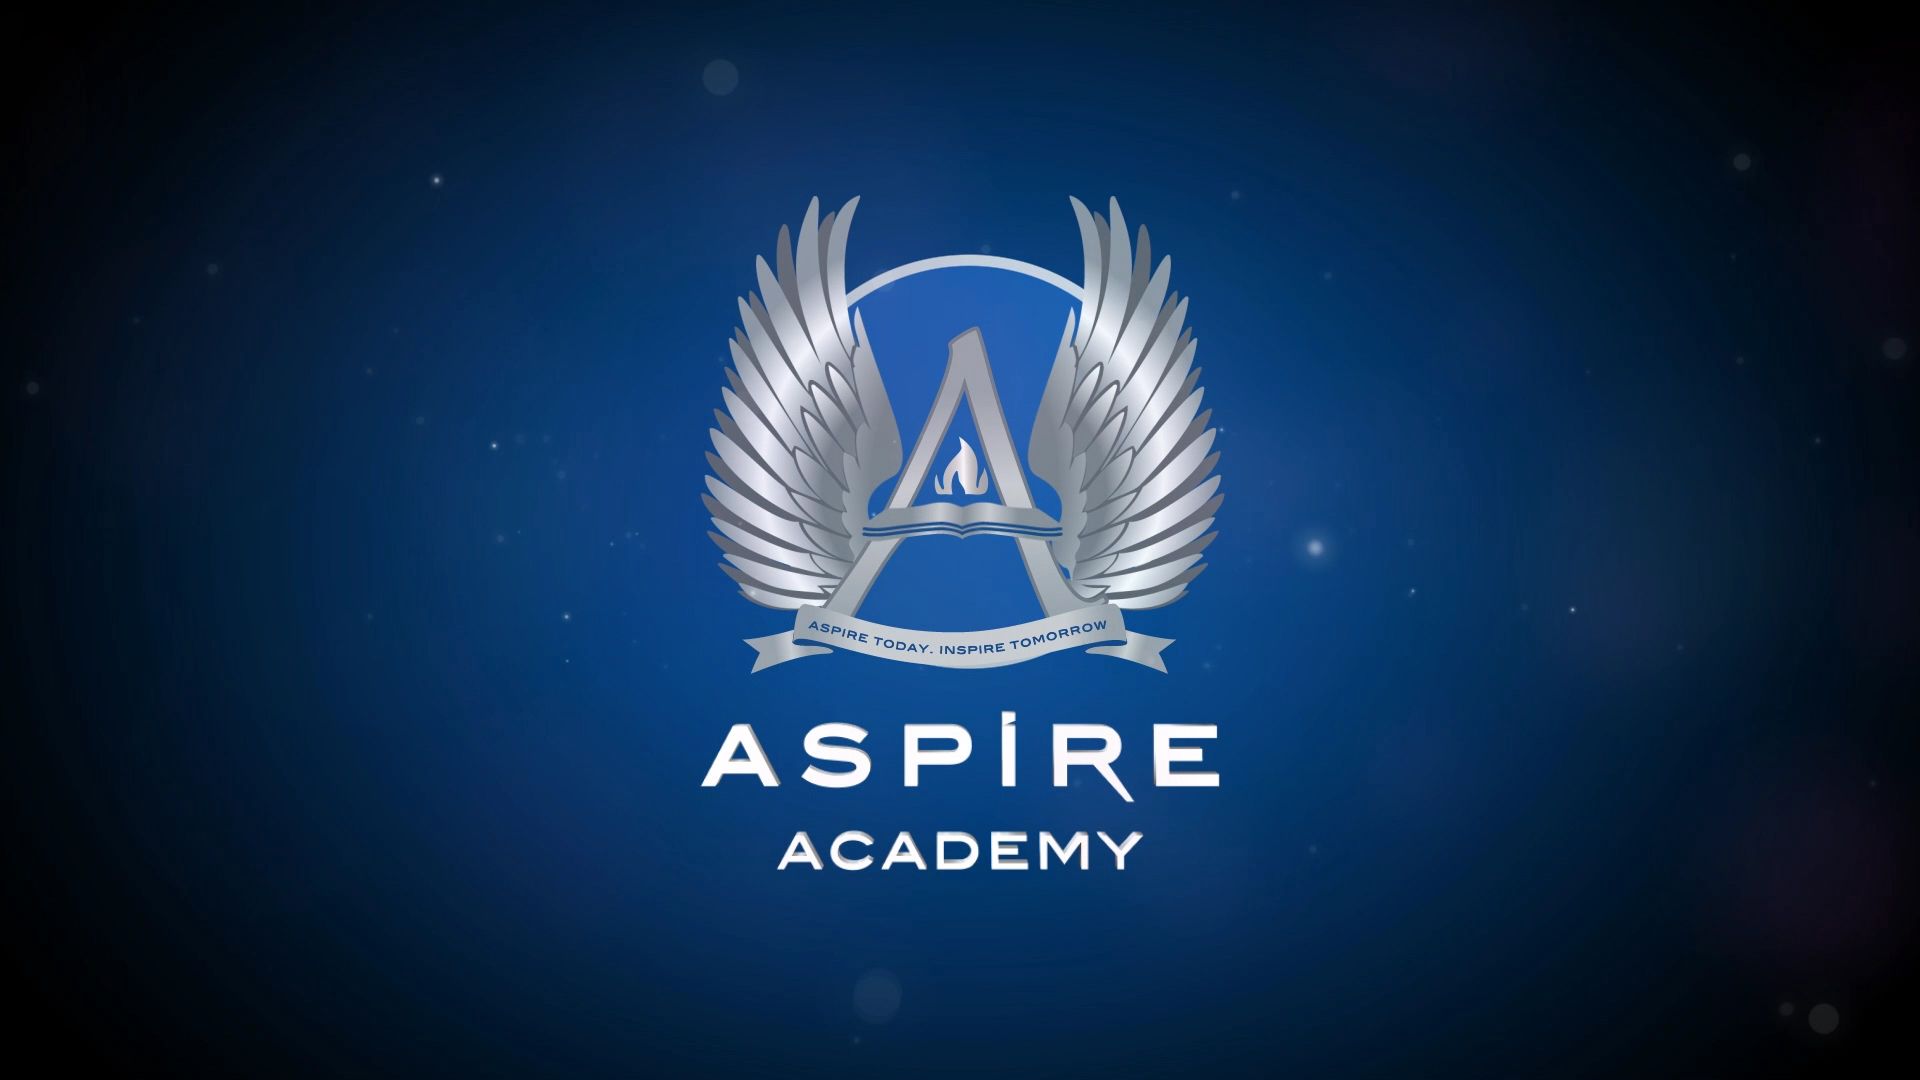 Aspire Academy Copyright: © www.aspire.qa